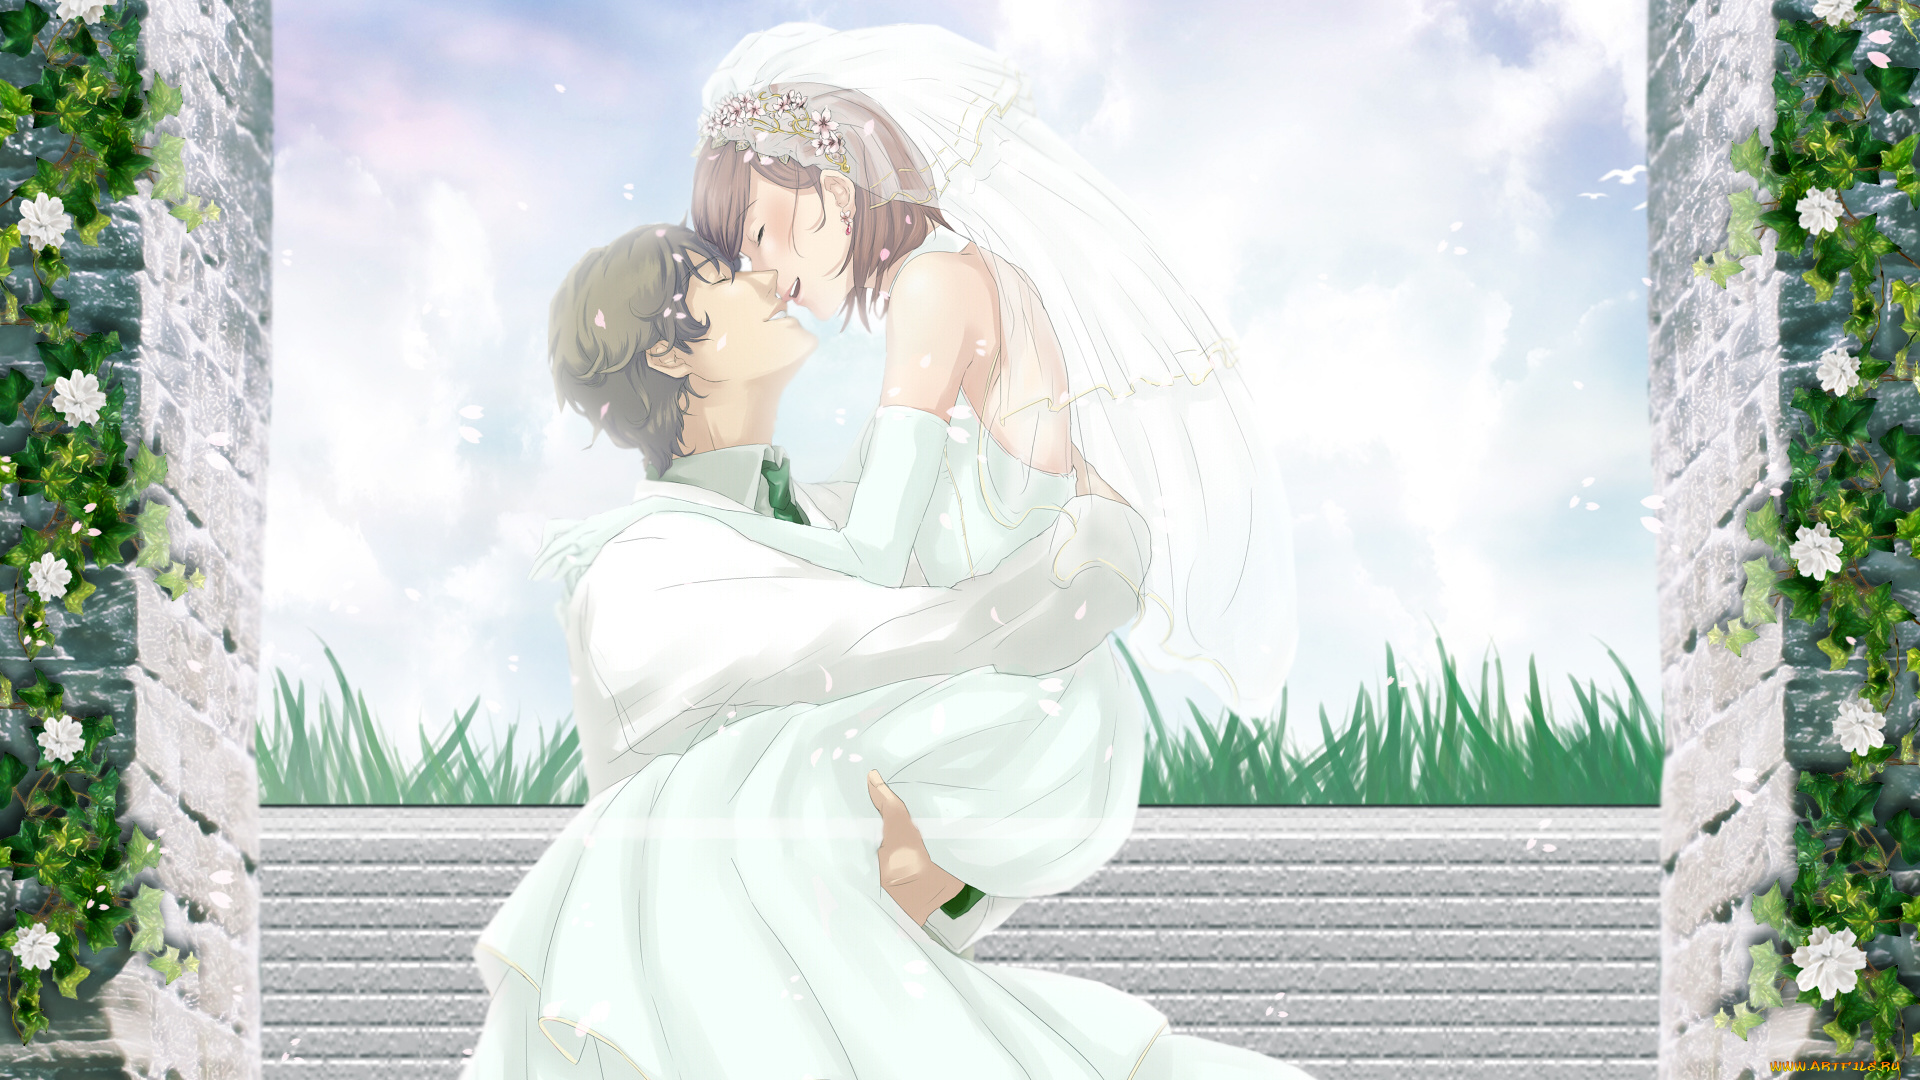 tokimeki, memorial, аниме, девушка, мужчина, свадьба, свадебное, платье, невеста, жених, фата, цветы, небо, облака, ограда, трава, растения